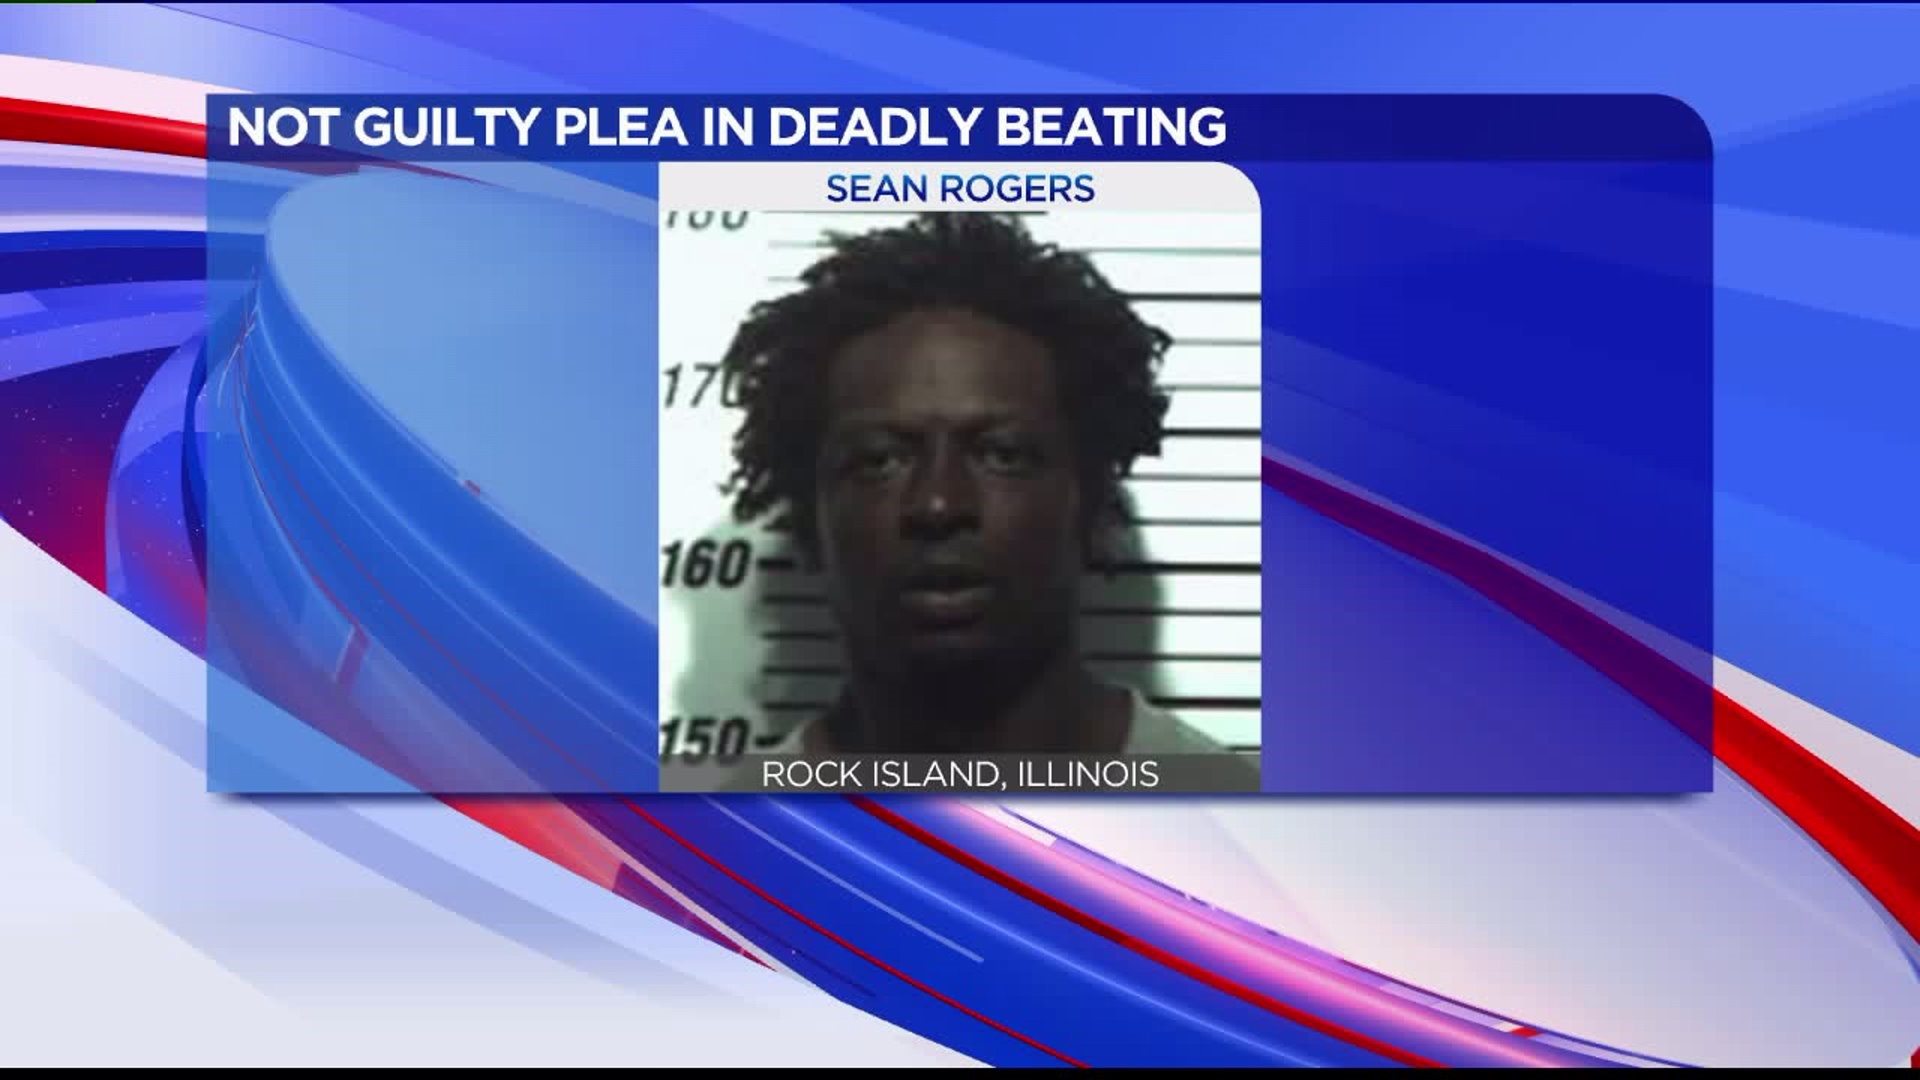 Sean Rogers pleads not guilty